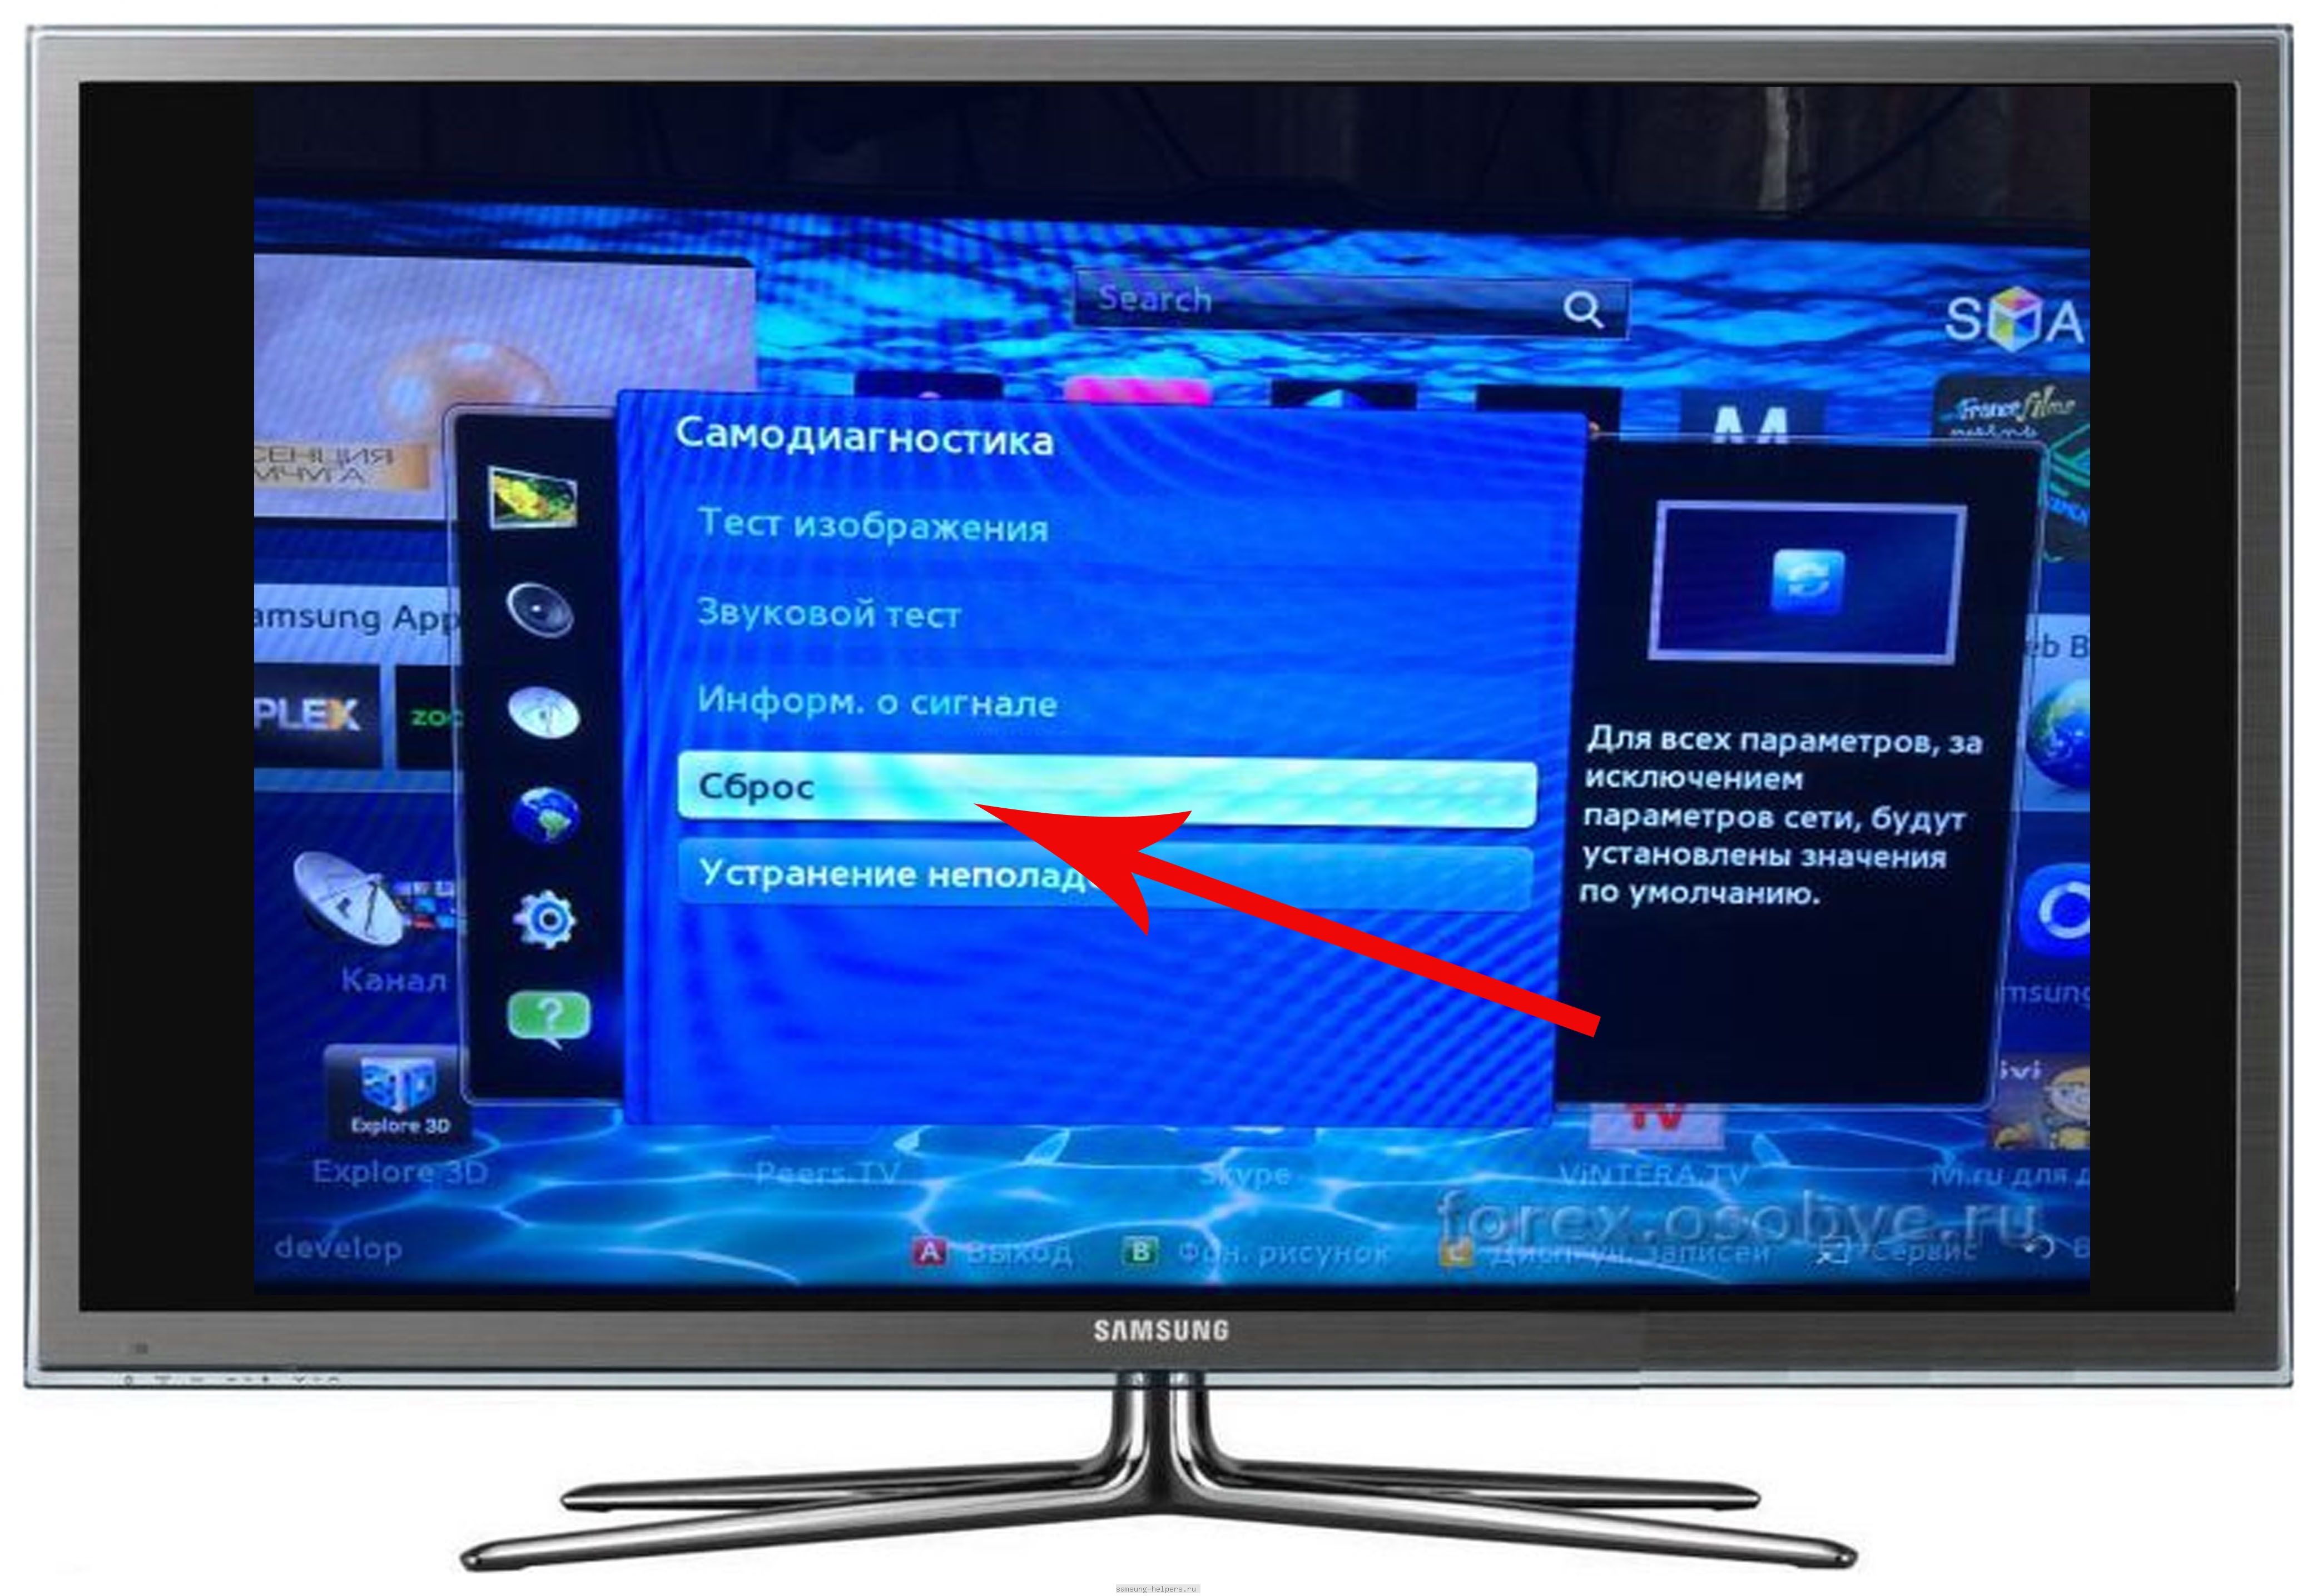 Samsung TV codes for universal remotes. Unlock Samsung Smart TV